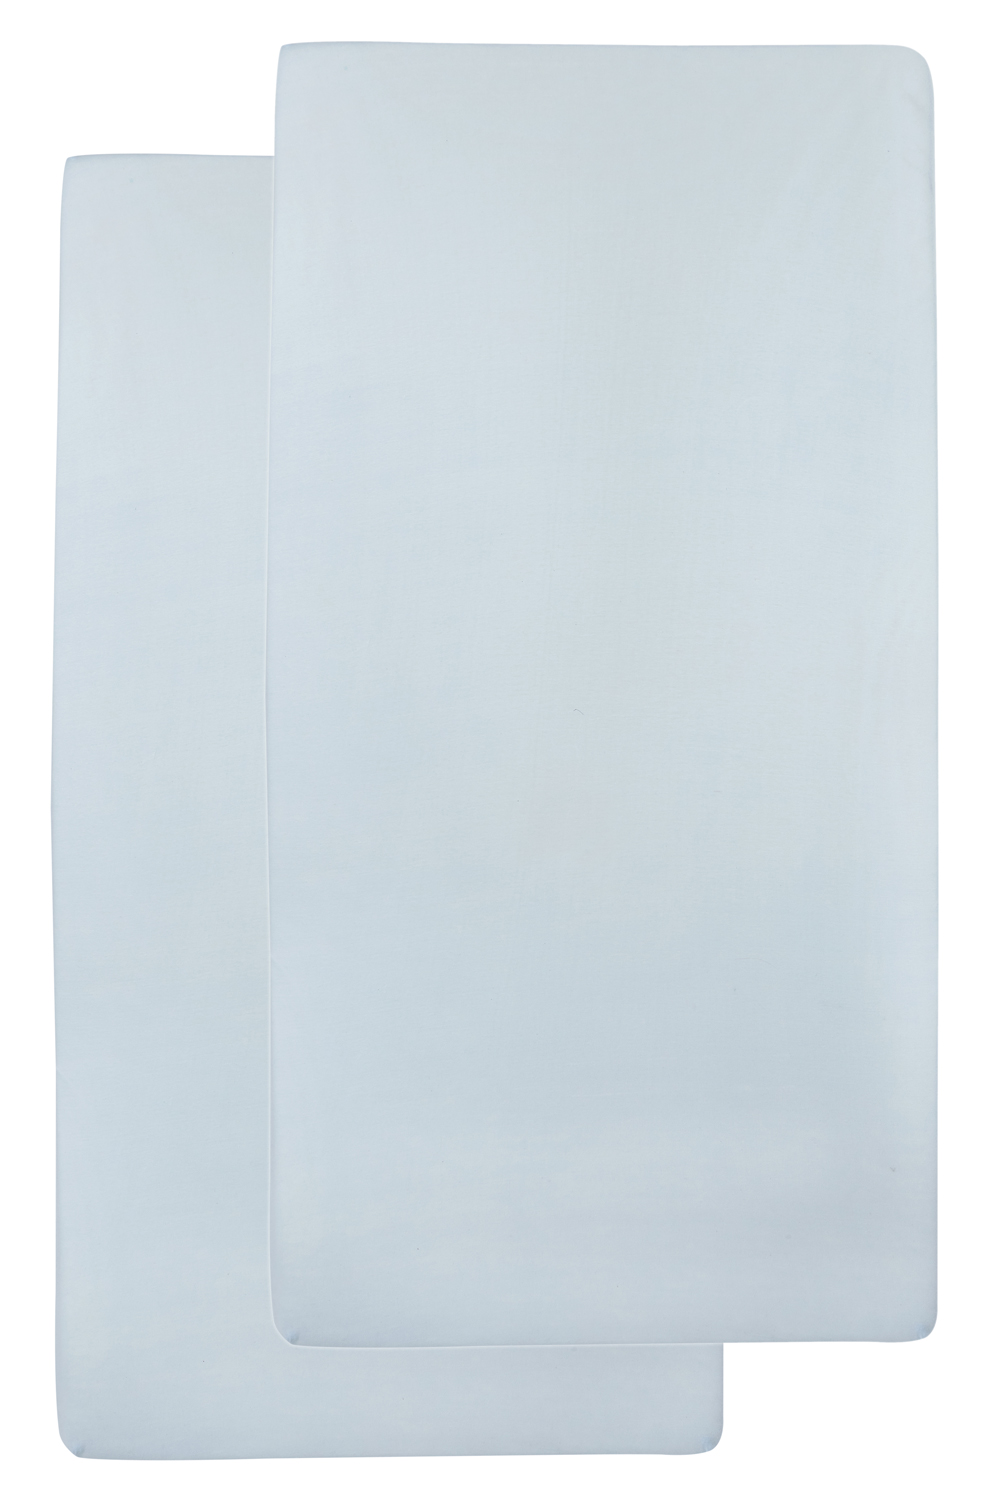 Jersey Fitted Sheet 2-Pack - Light Blue - 70X140/150cm